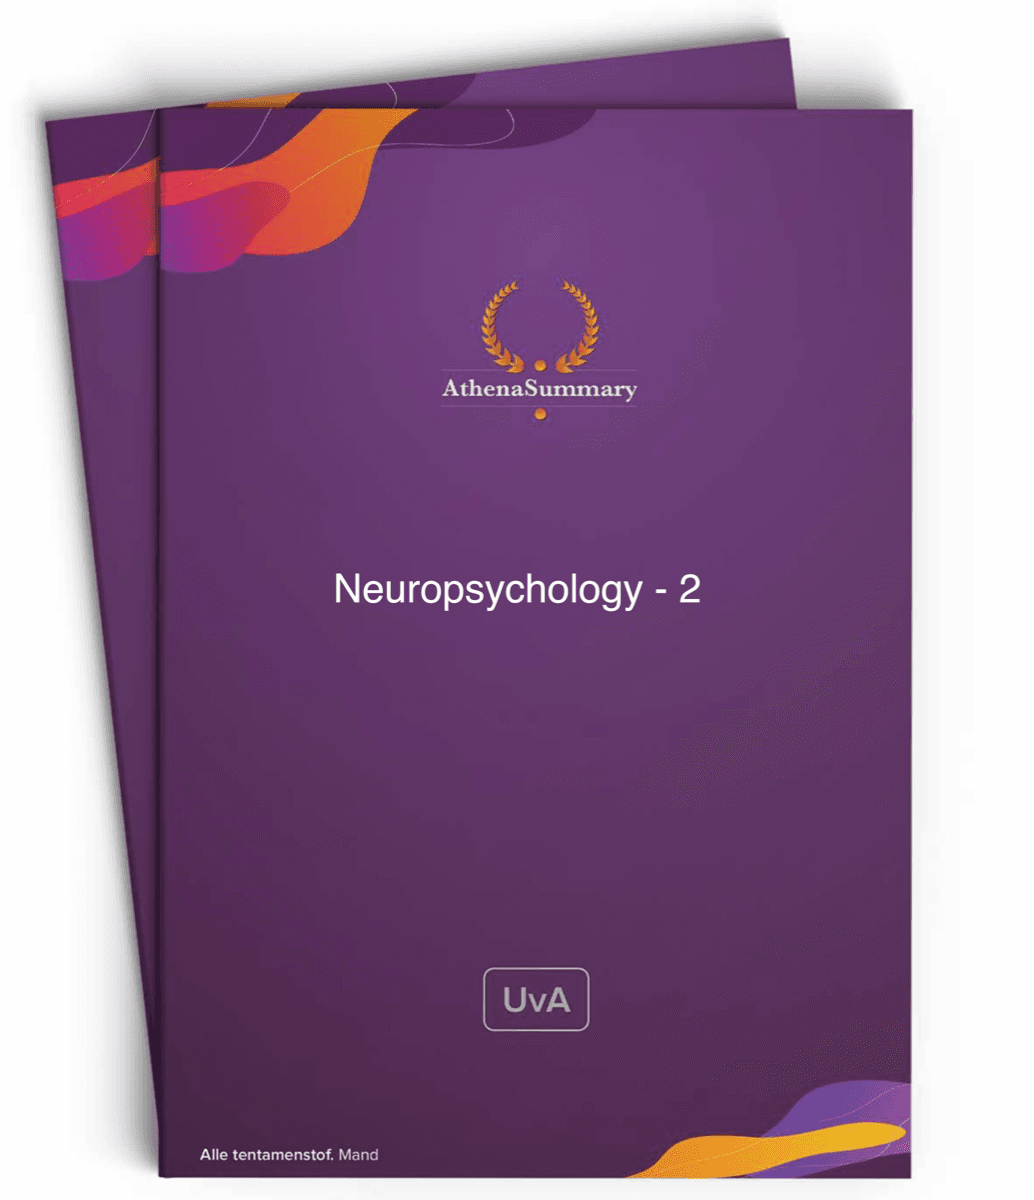 Literature Summary: Neuropsychology - 2